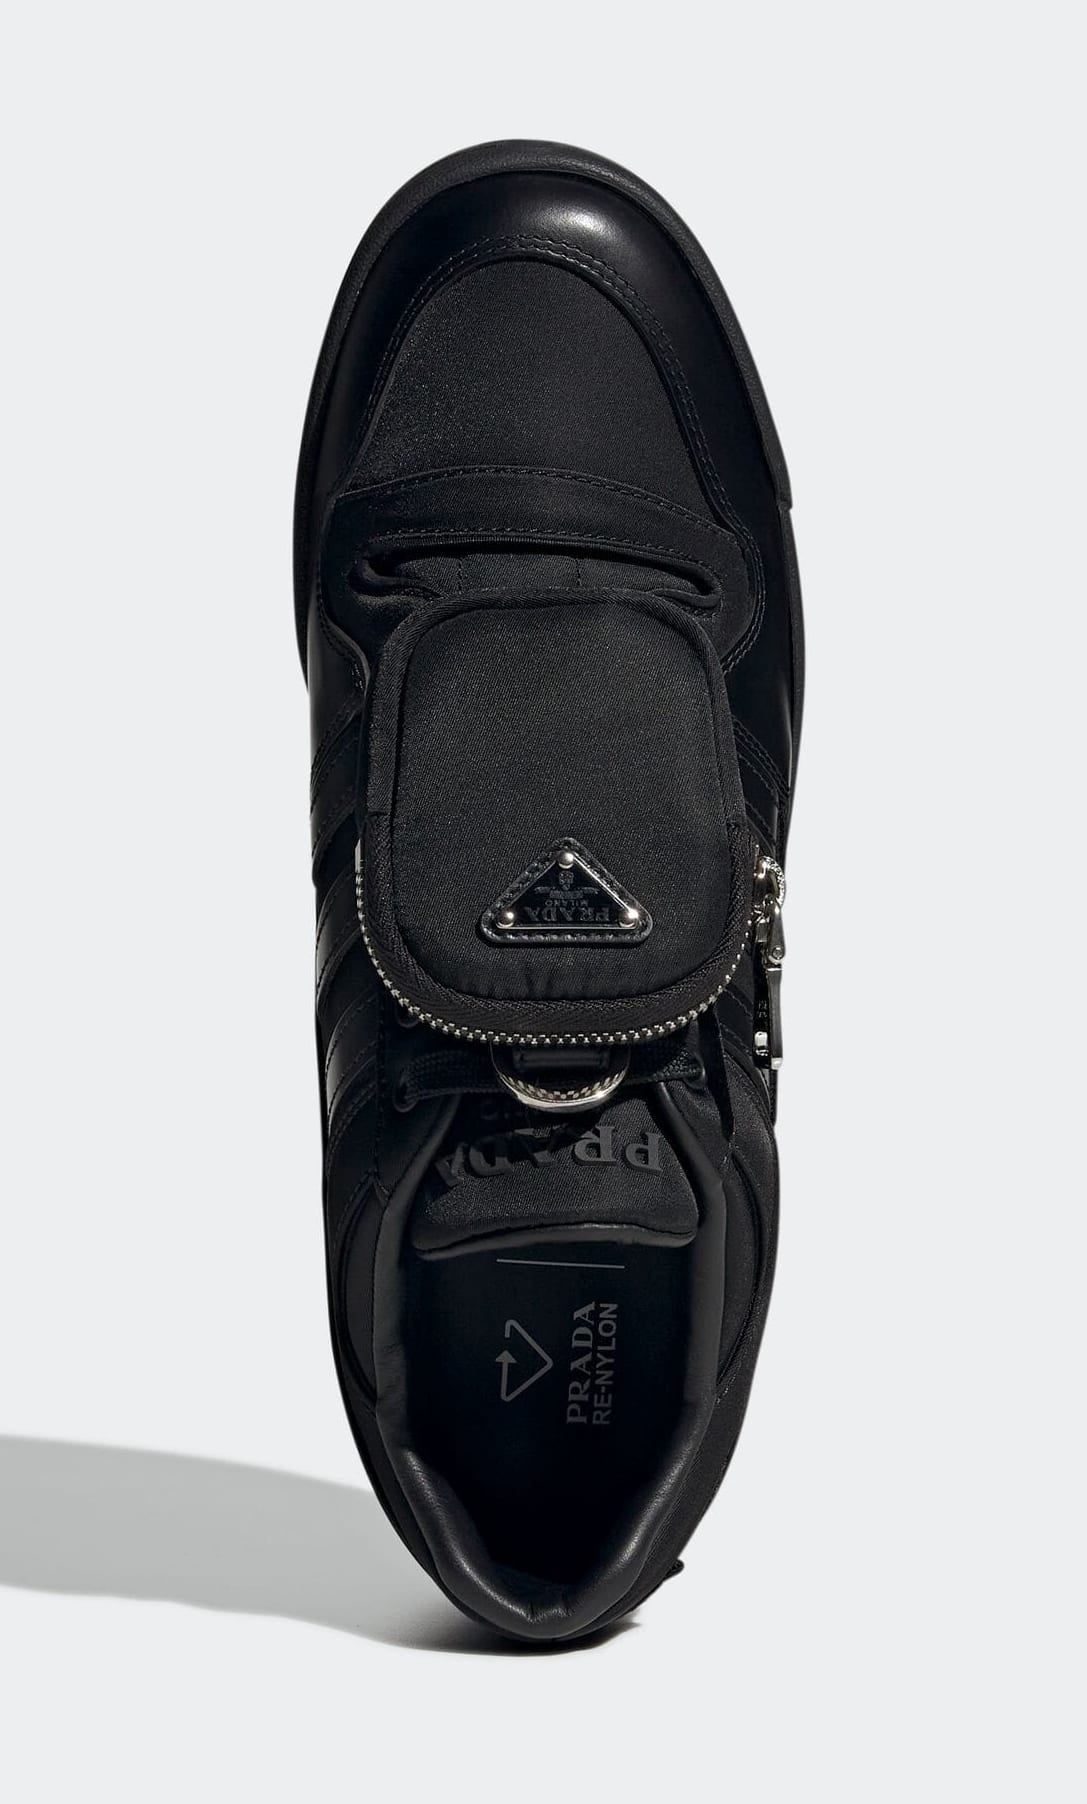 Prada x Adidas Forum Low 'Black' GY7043 Top